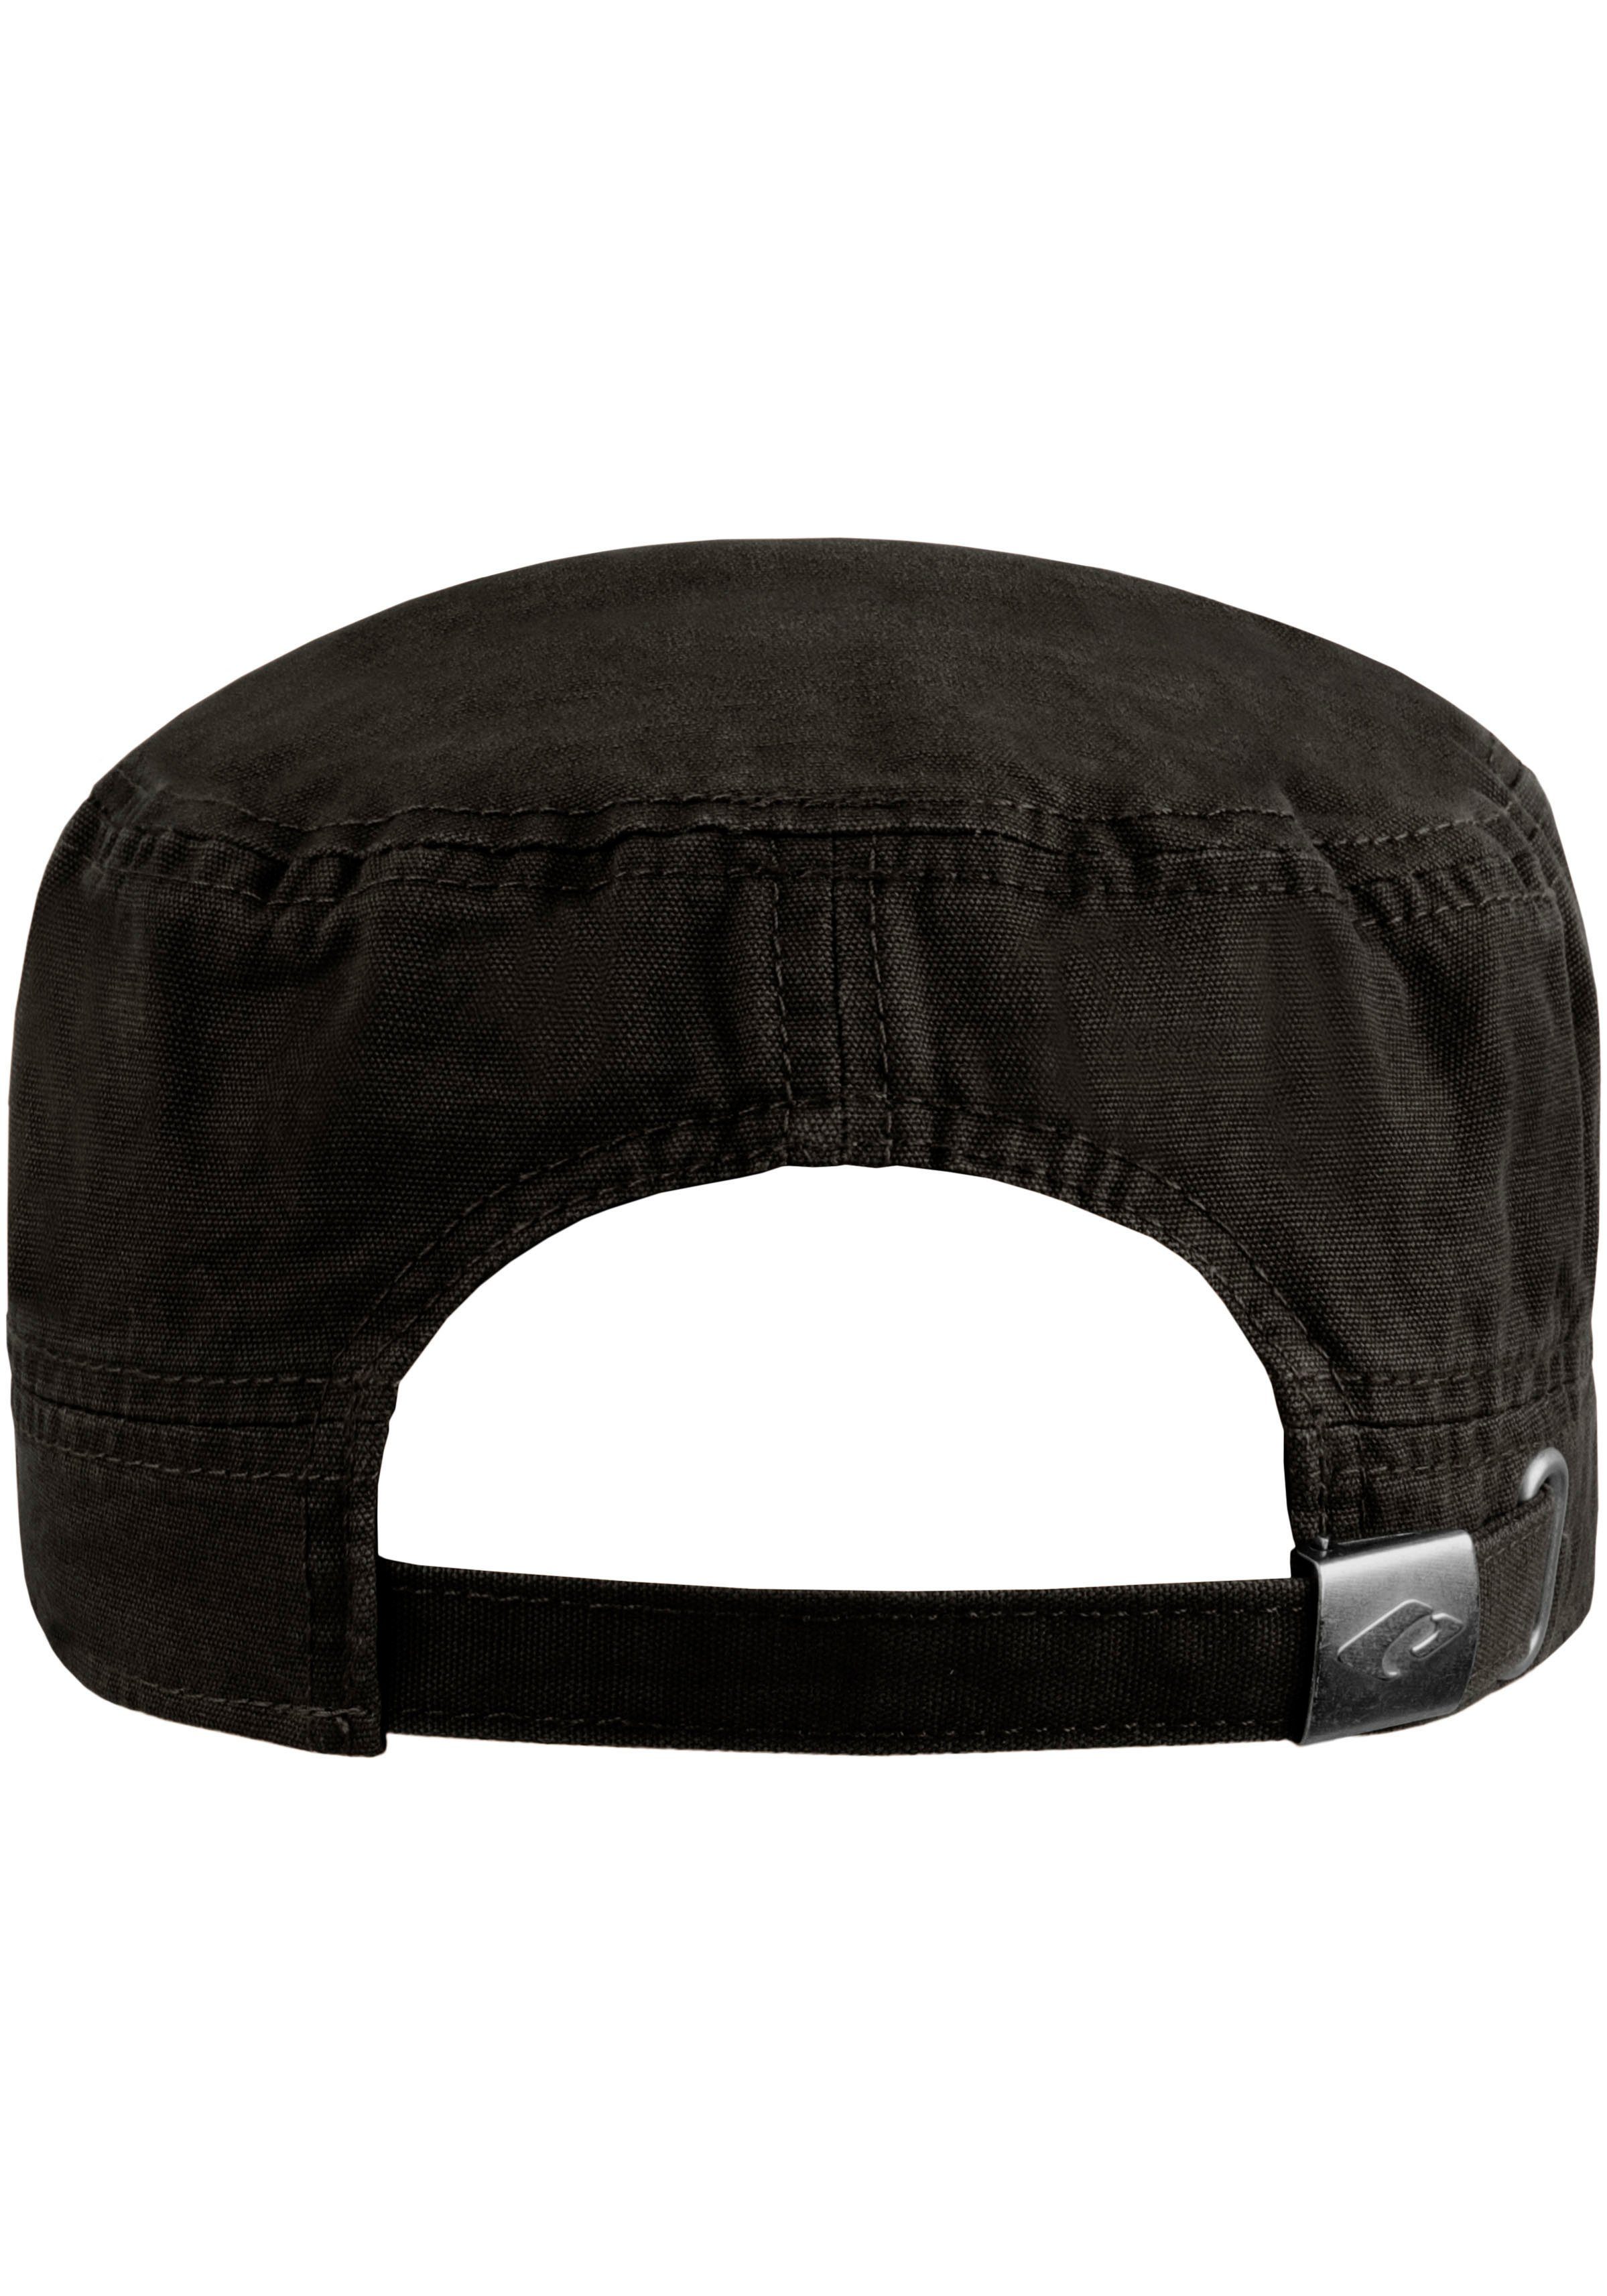 schwarz Army Hat Mililtary-Style Dublin Cap im Cap chillouts